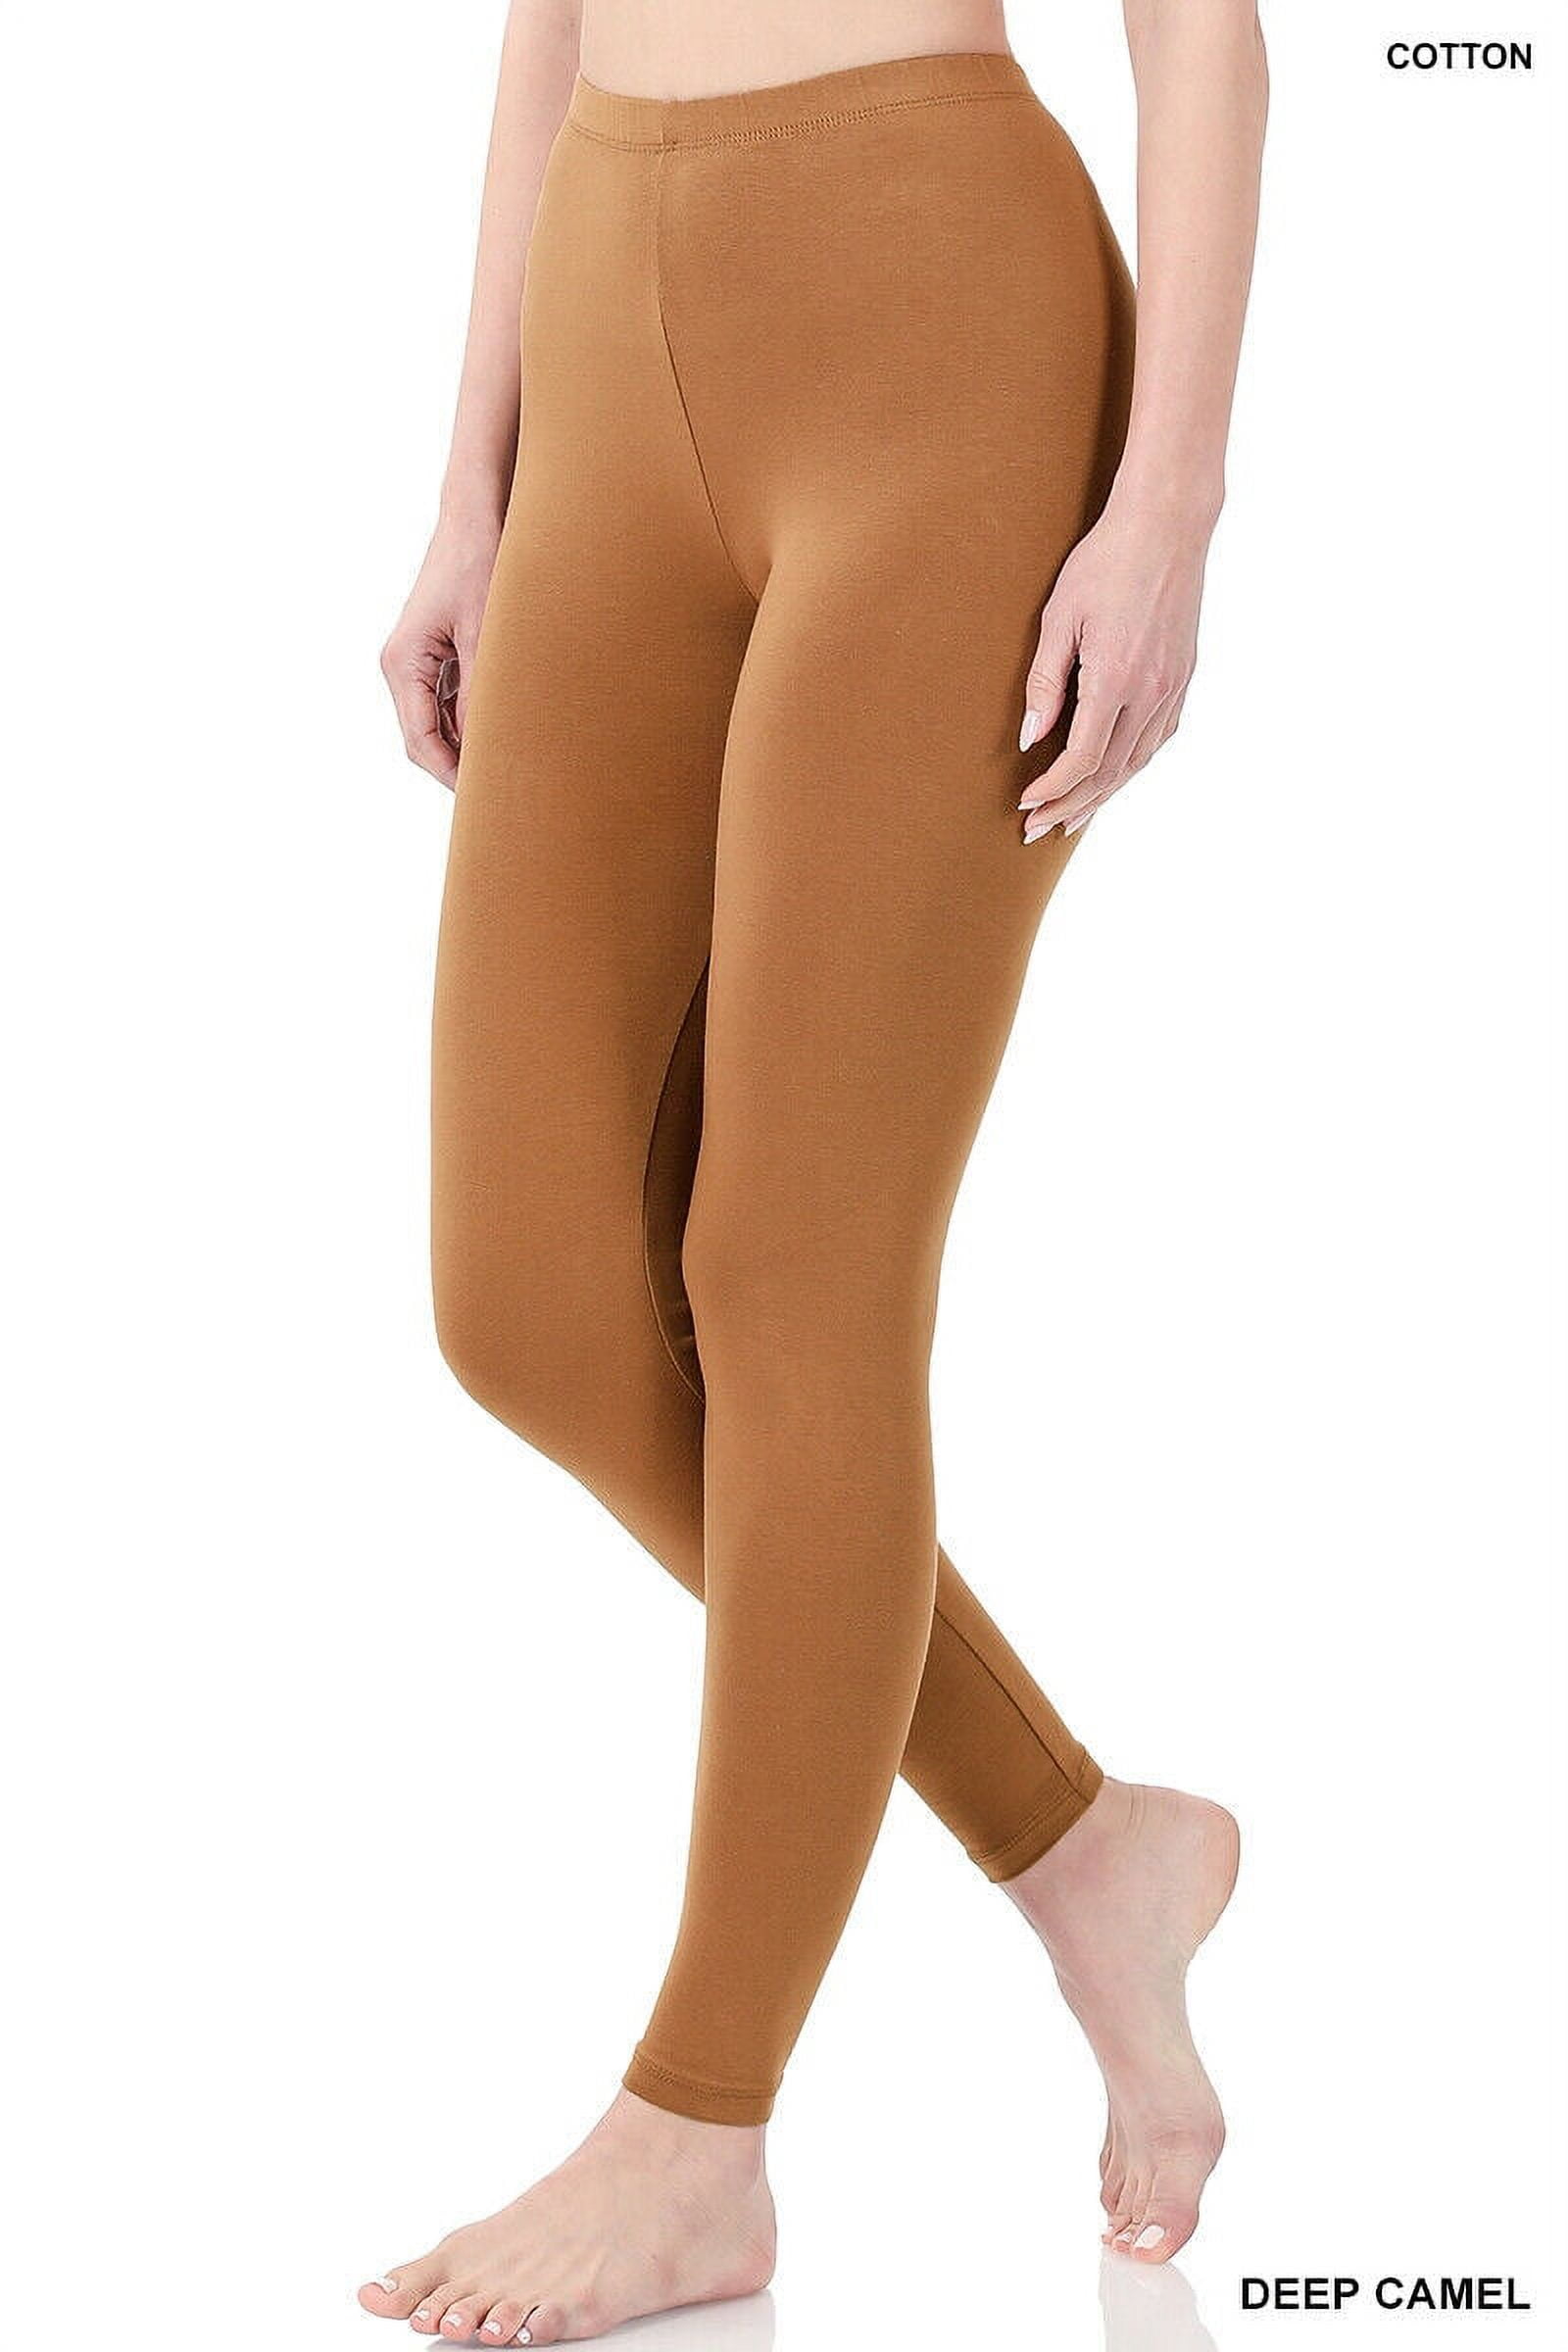 Zenana Premium Cotton Full Ankle Length Womens Basic Leggings - Multiple  Solid Colors Sizes S-3X